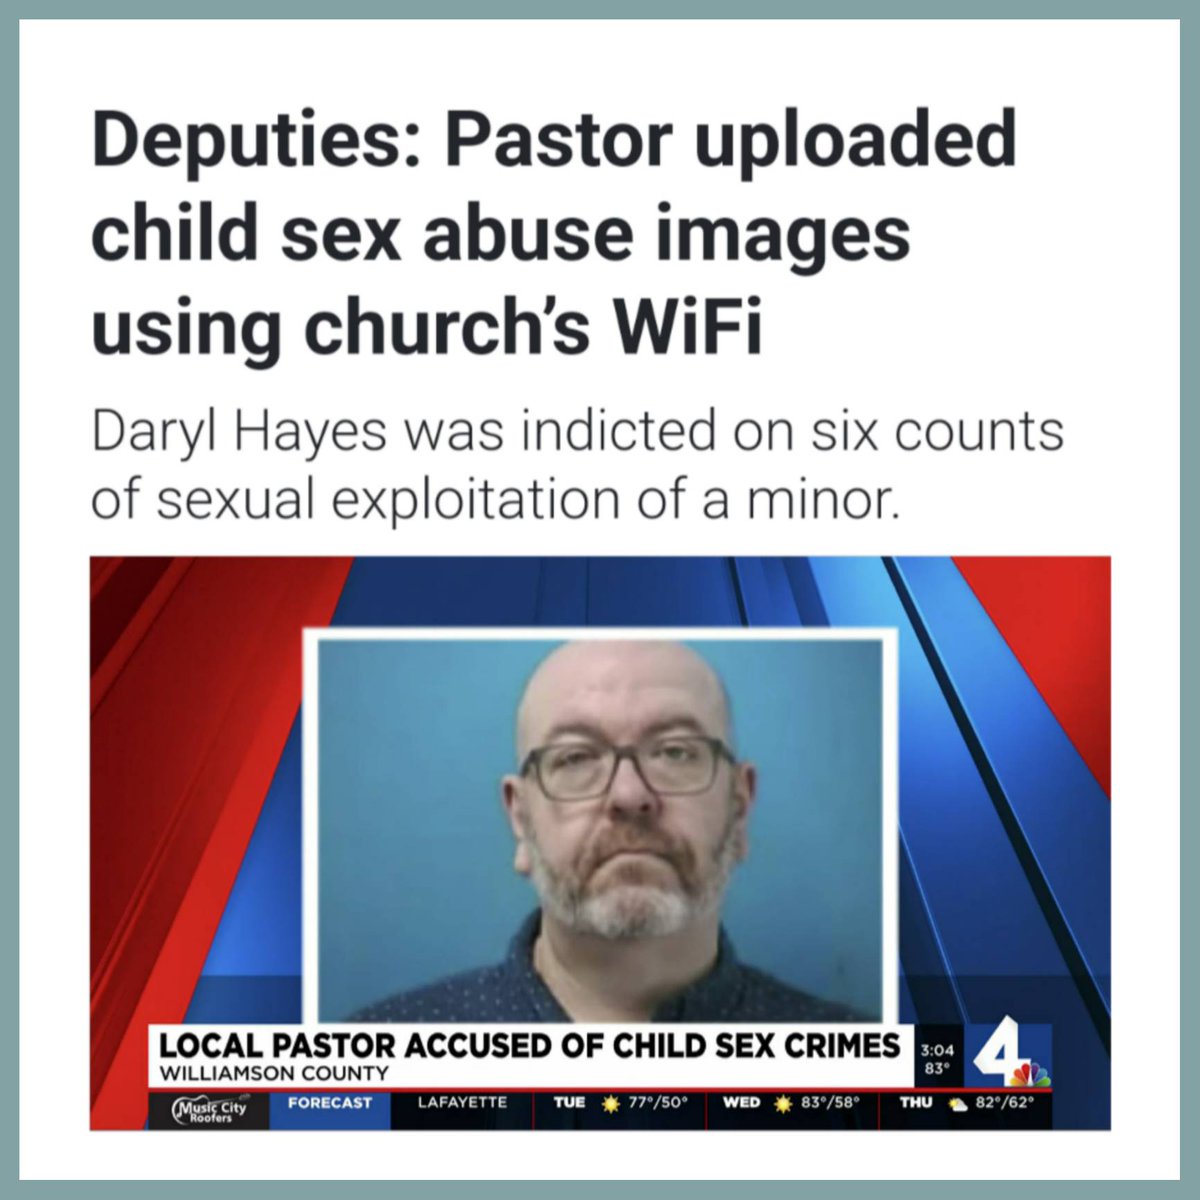 Oh look, yet again pastor.